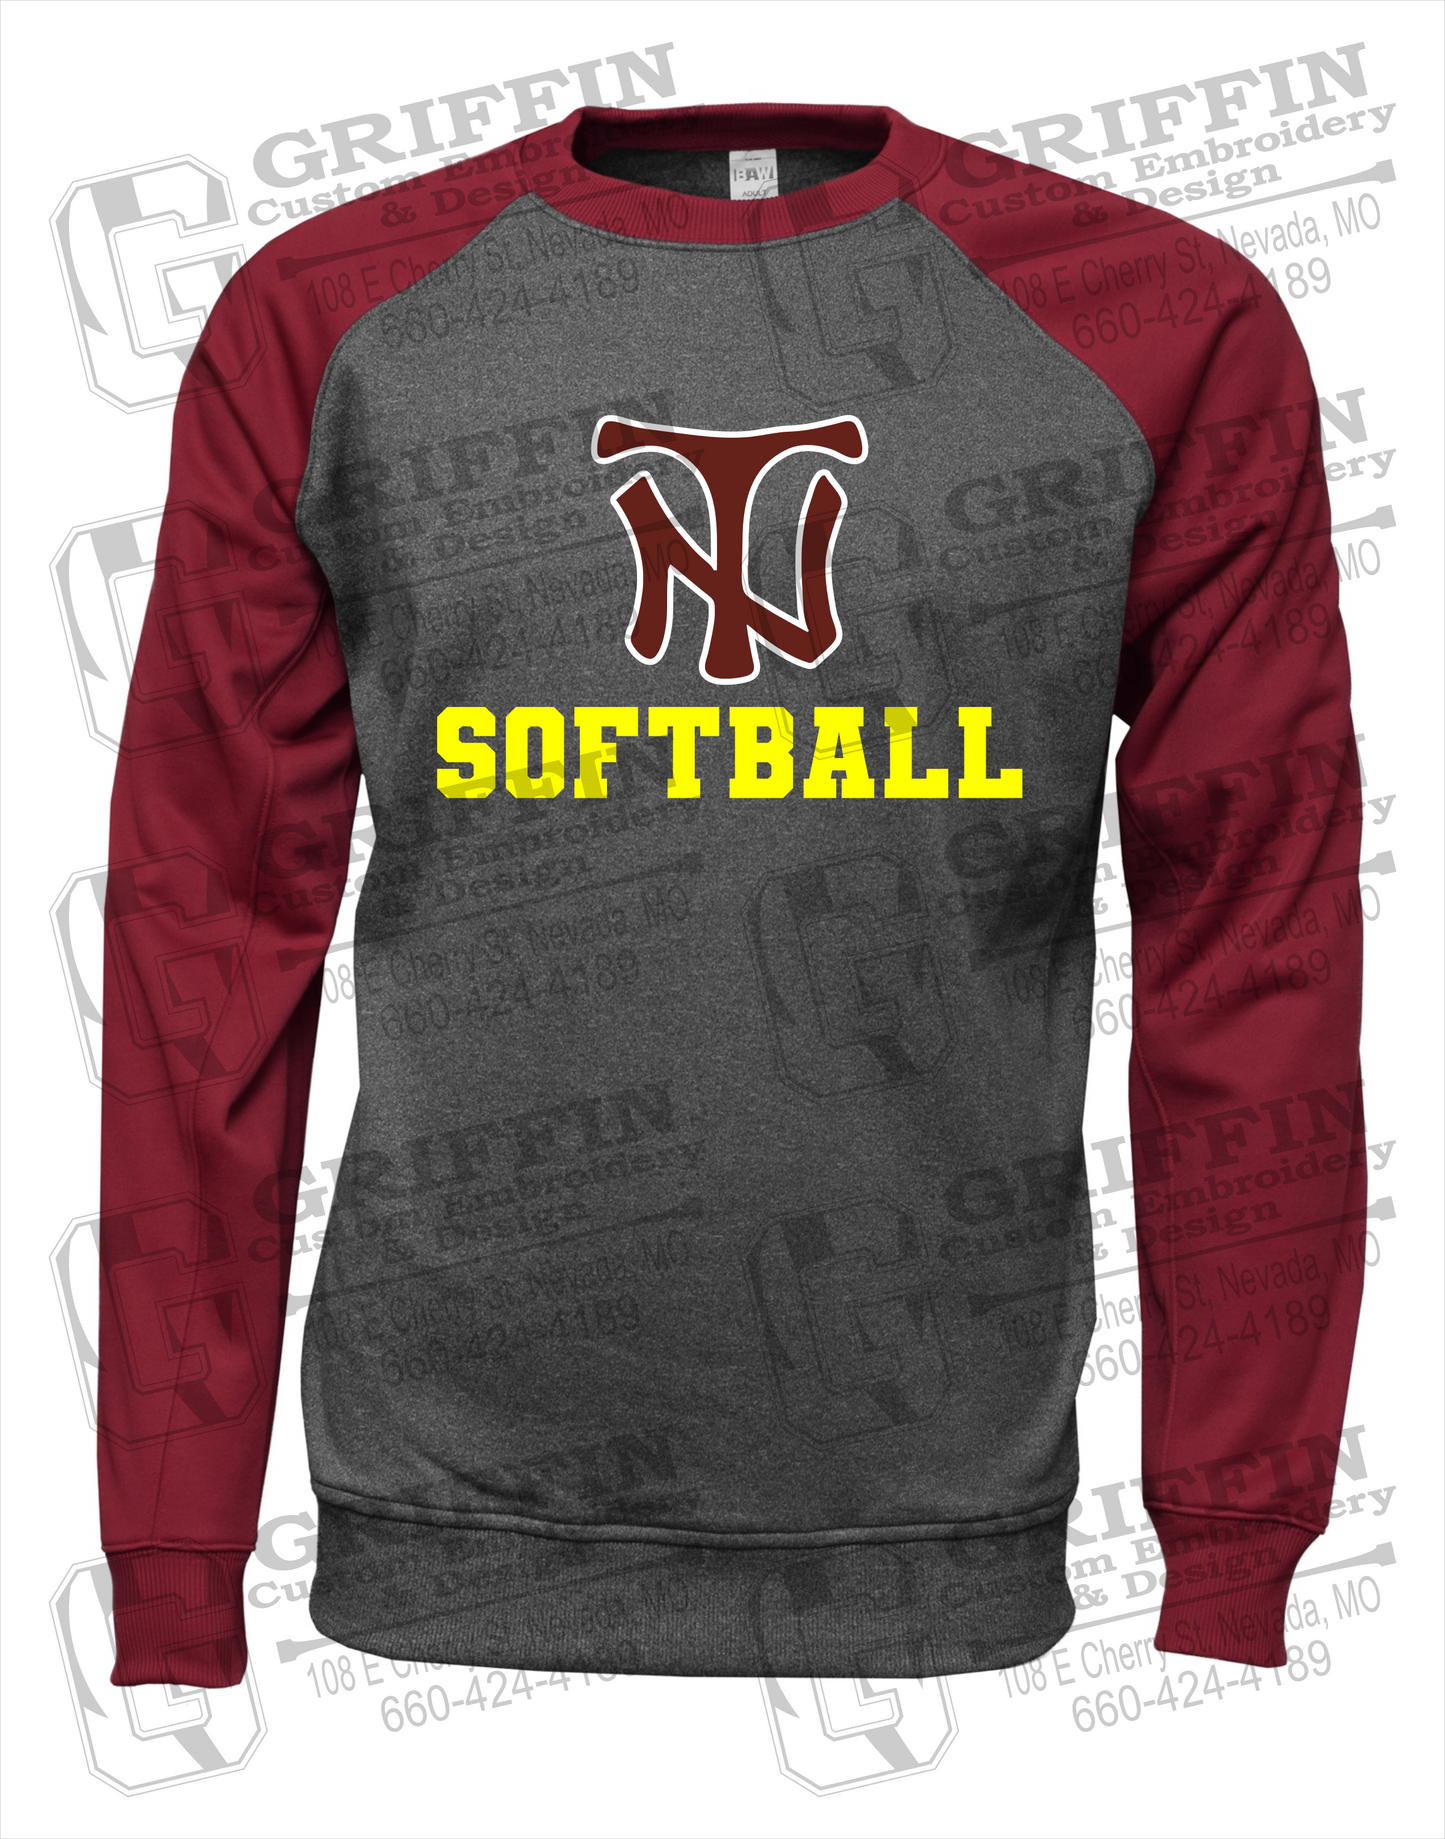 Nevada Tigers 24-C Youth Raglan Sweatshirt - Softball